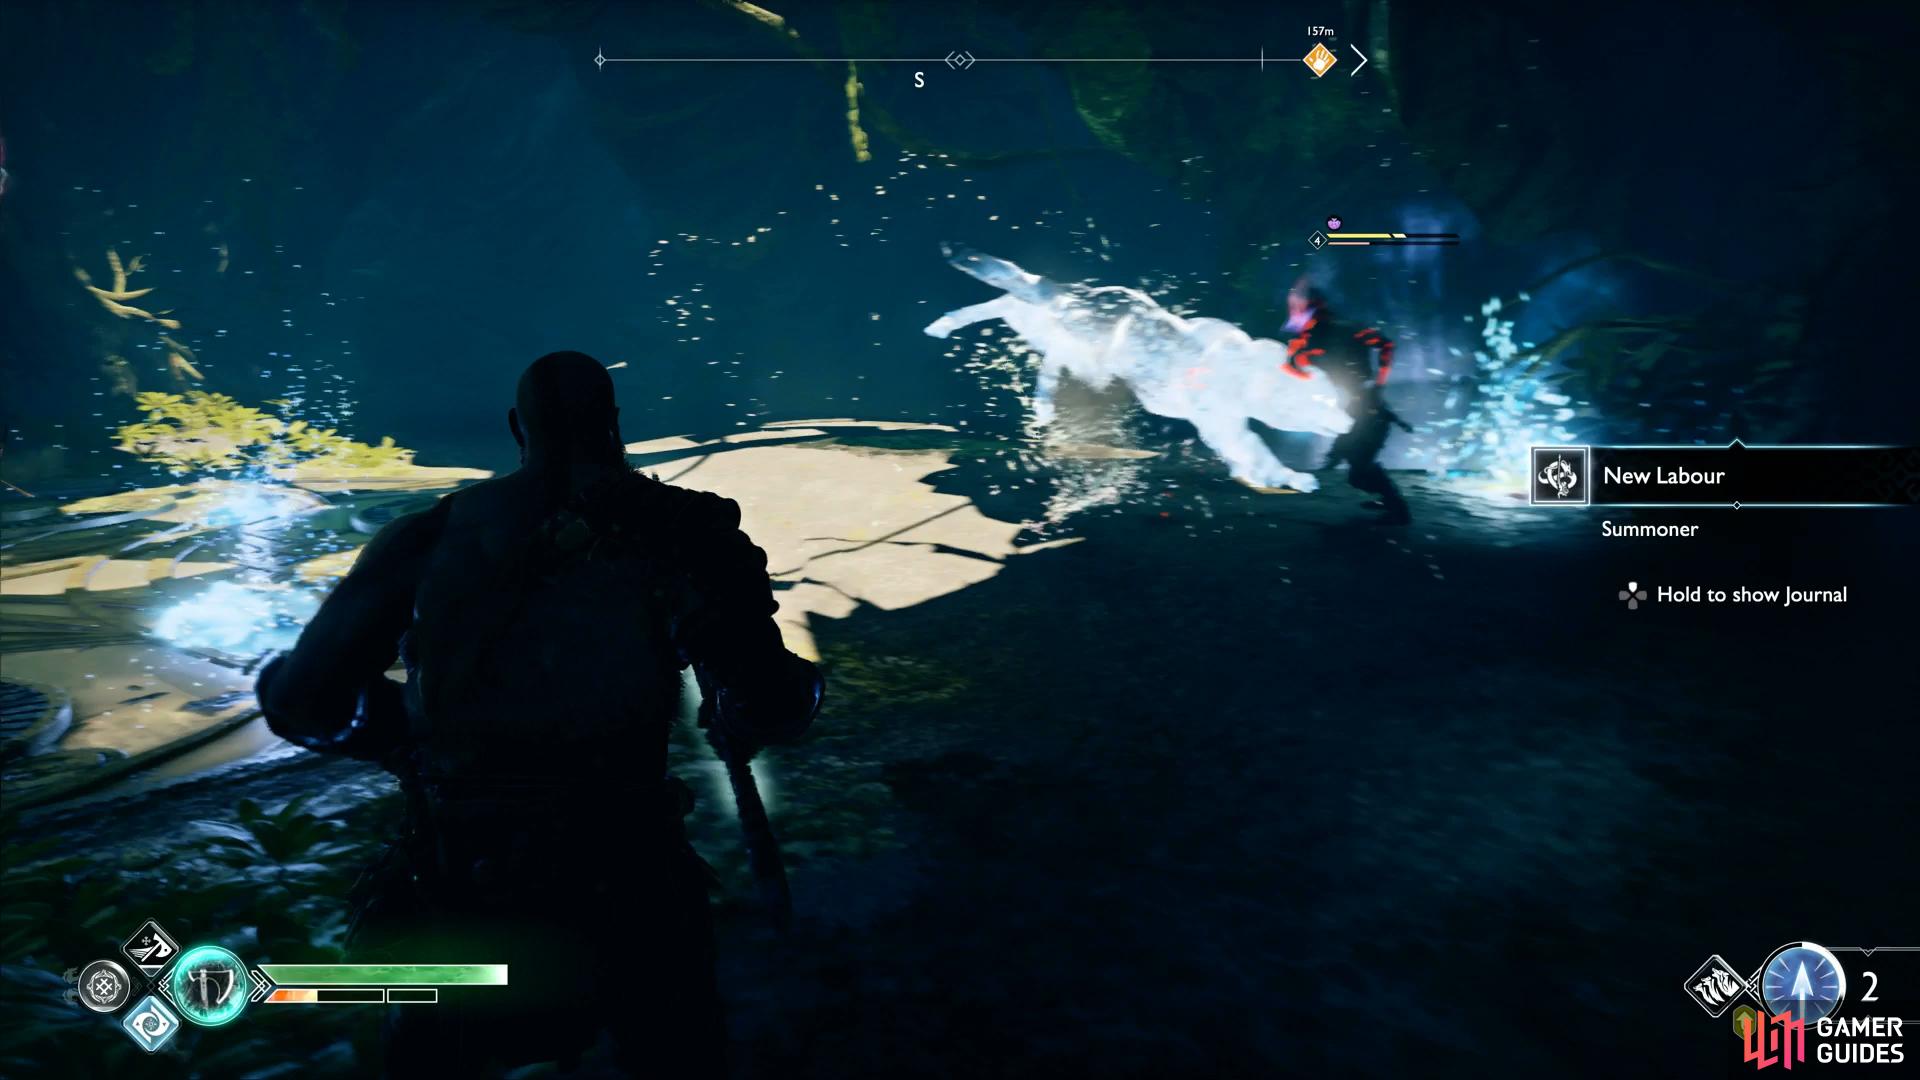 The Witcher 3: Wild Hunt Screenshot